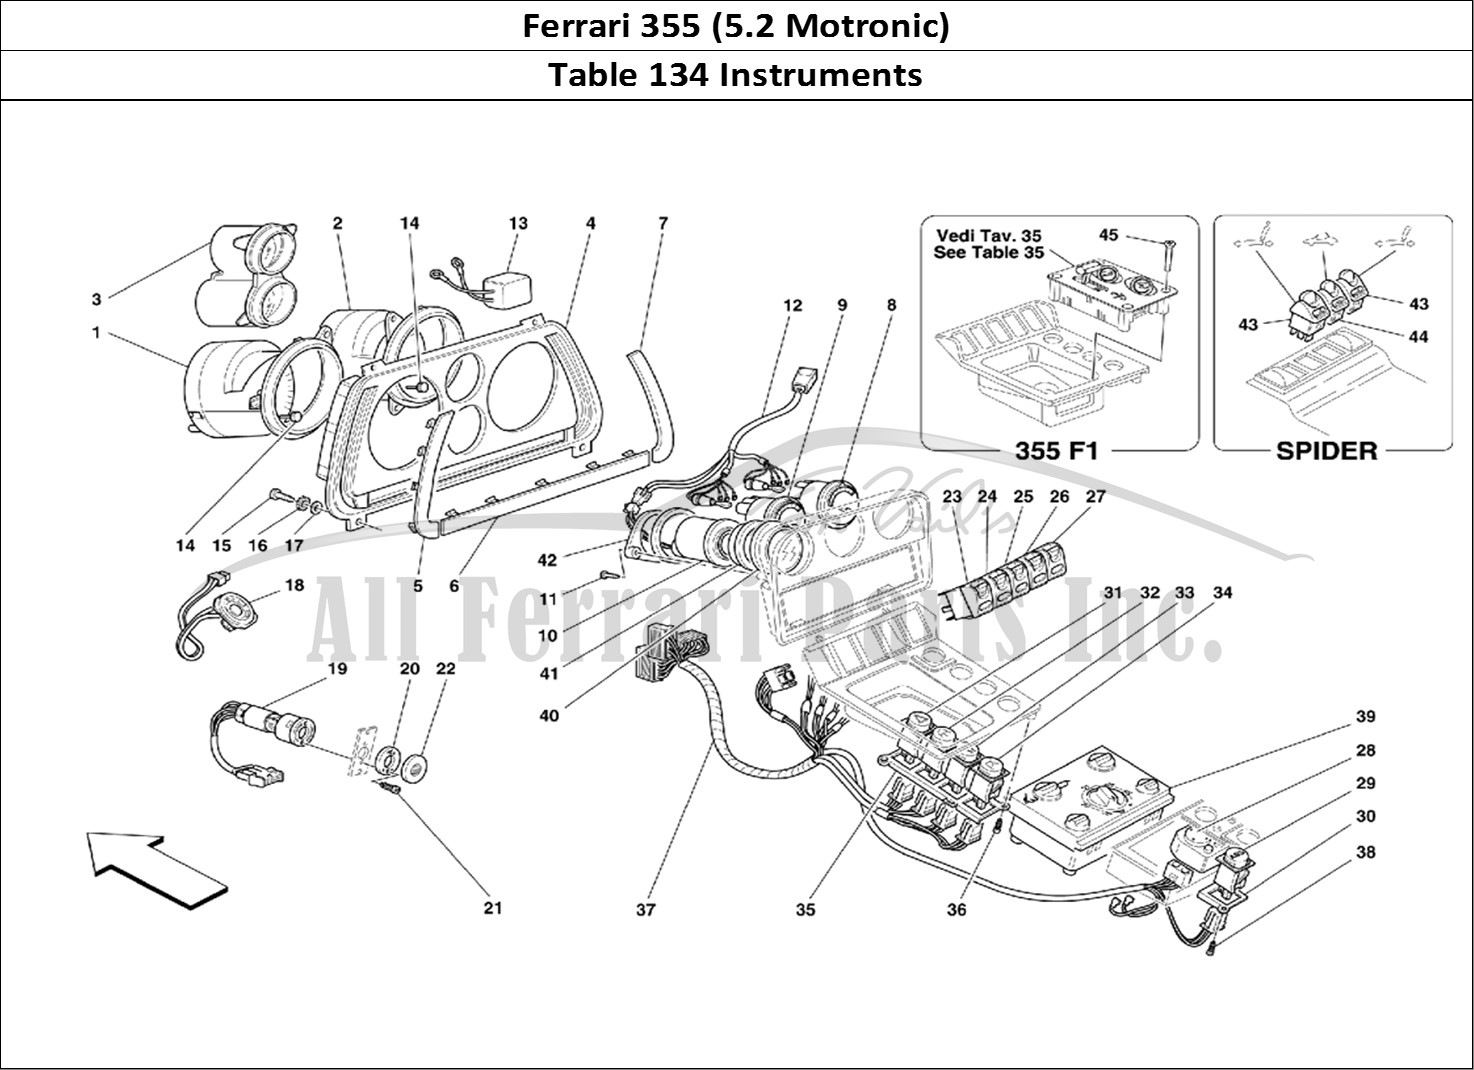 Ferrari Parts Ferrari 355 (5.2 Motronic) Page 134 Instruments